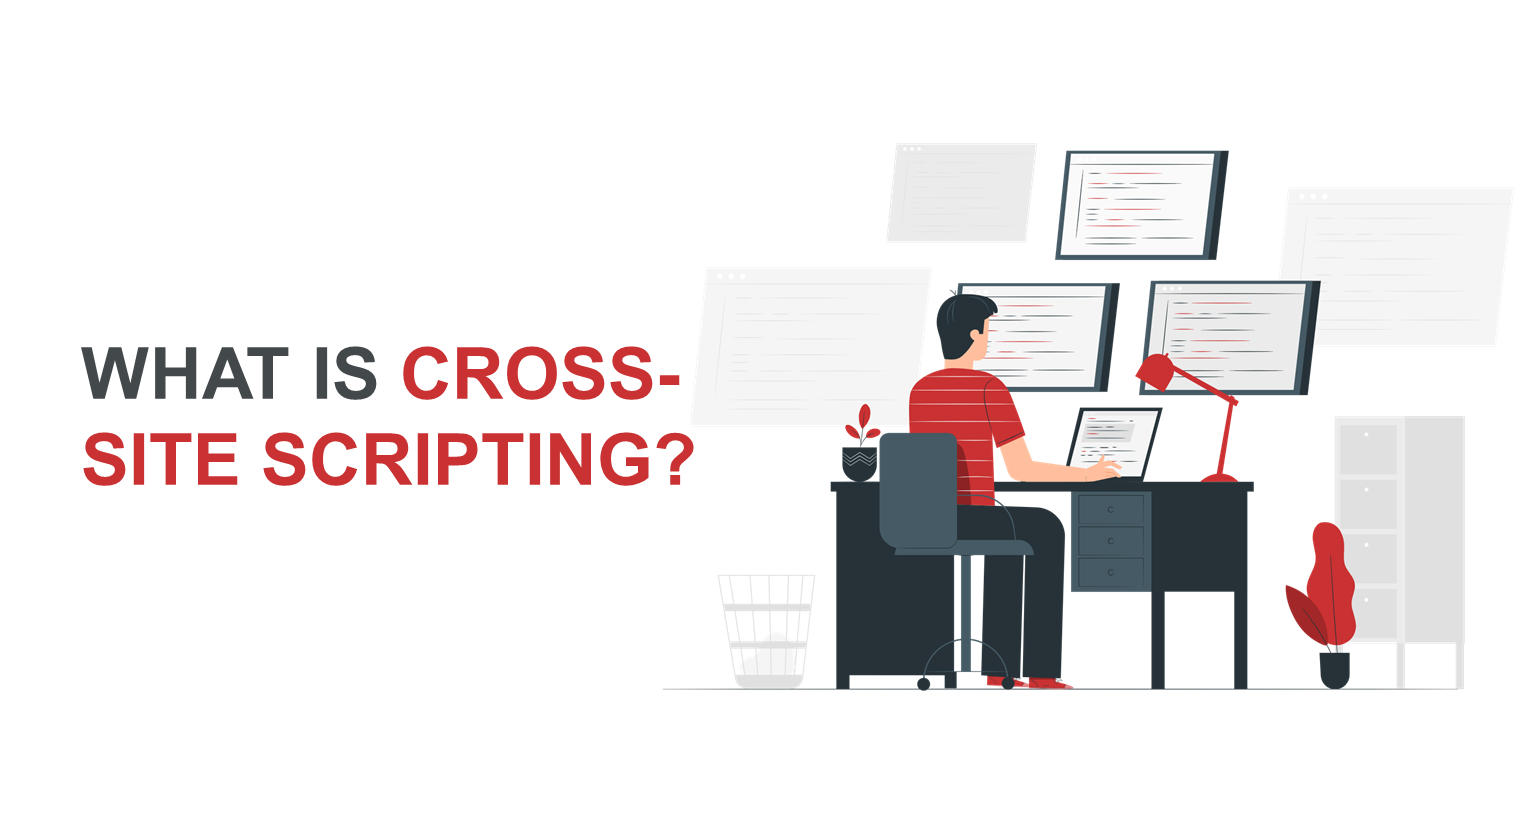 What is Cross-Site Scripting?